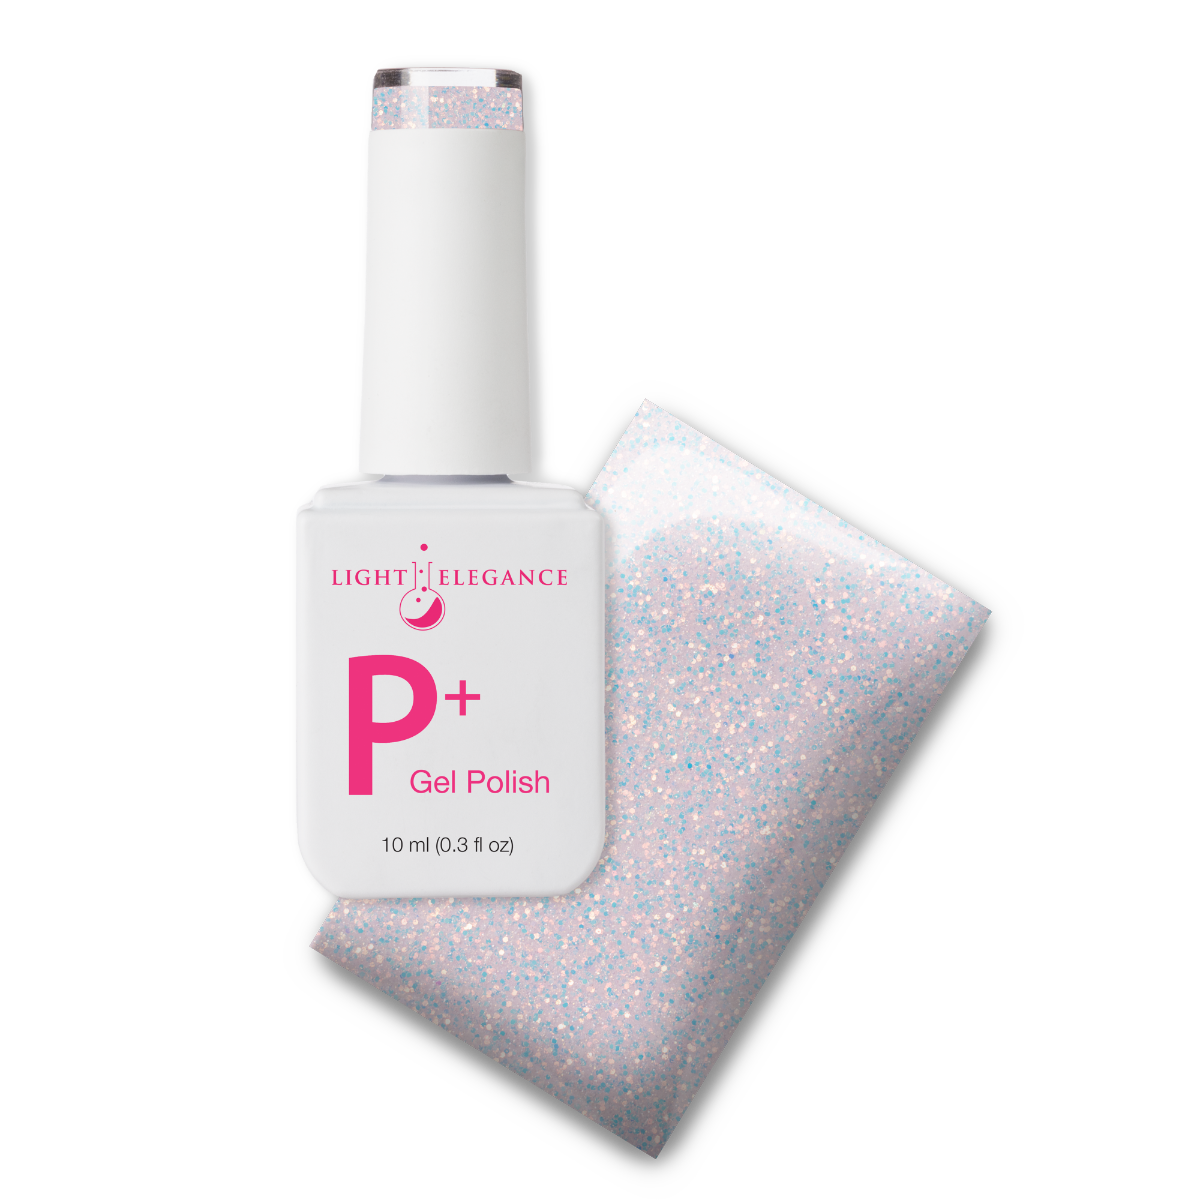 Light Elegance P+ Soak Off Glitter Gel - She's a Star :: New Packaging